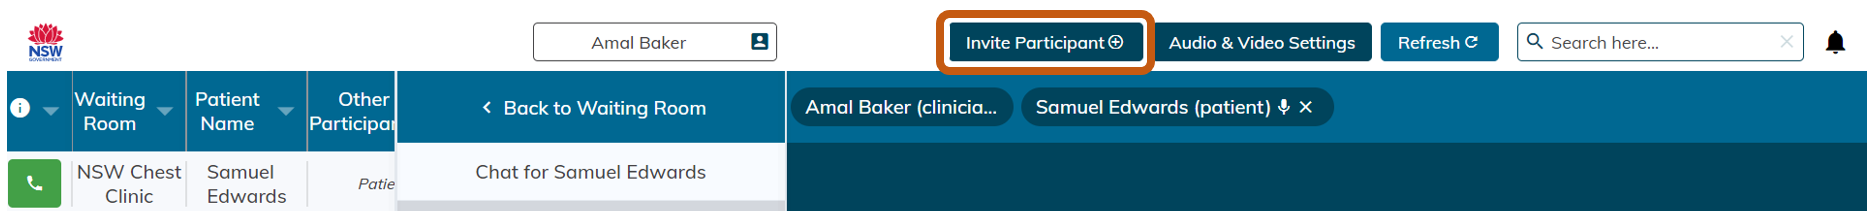 Screenshot - invite additional participants